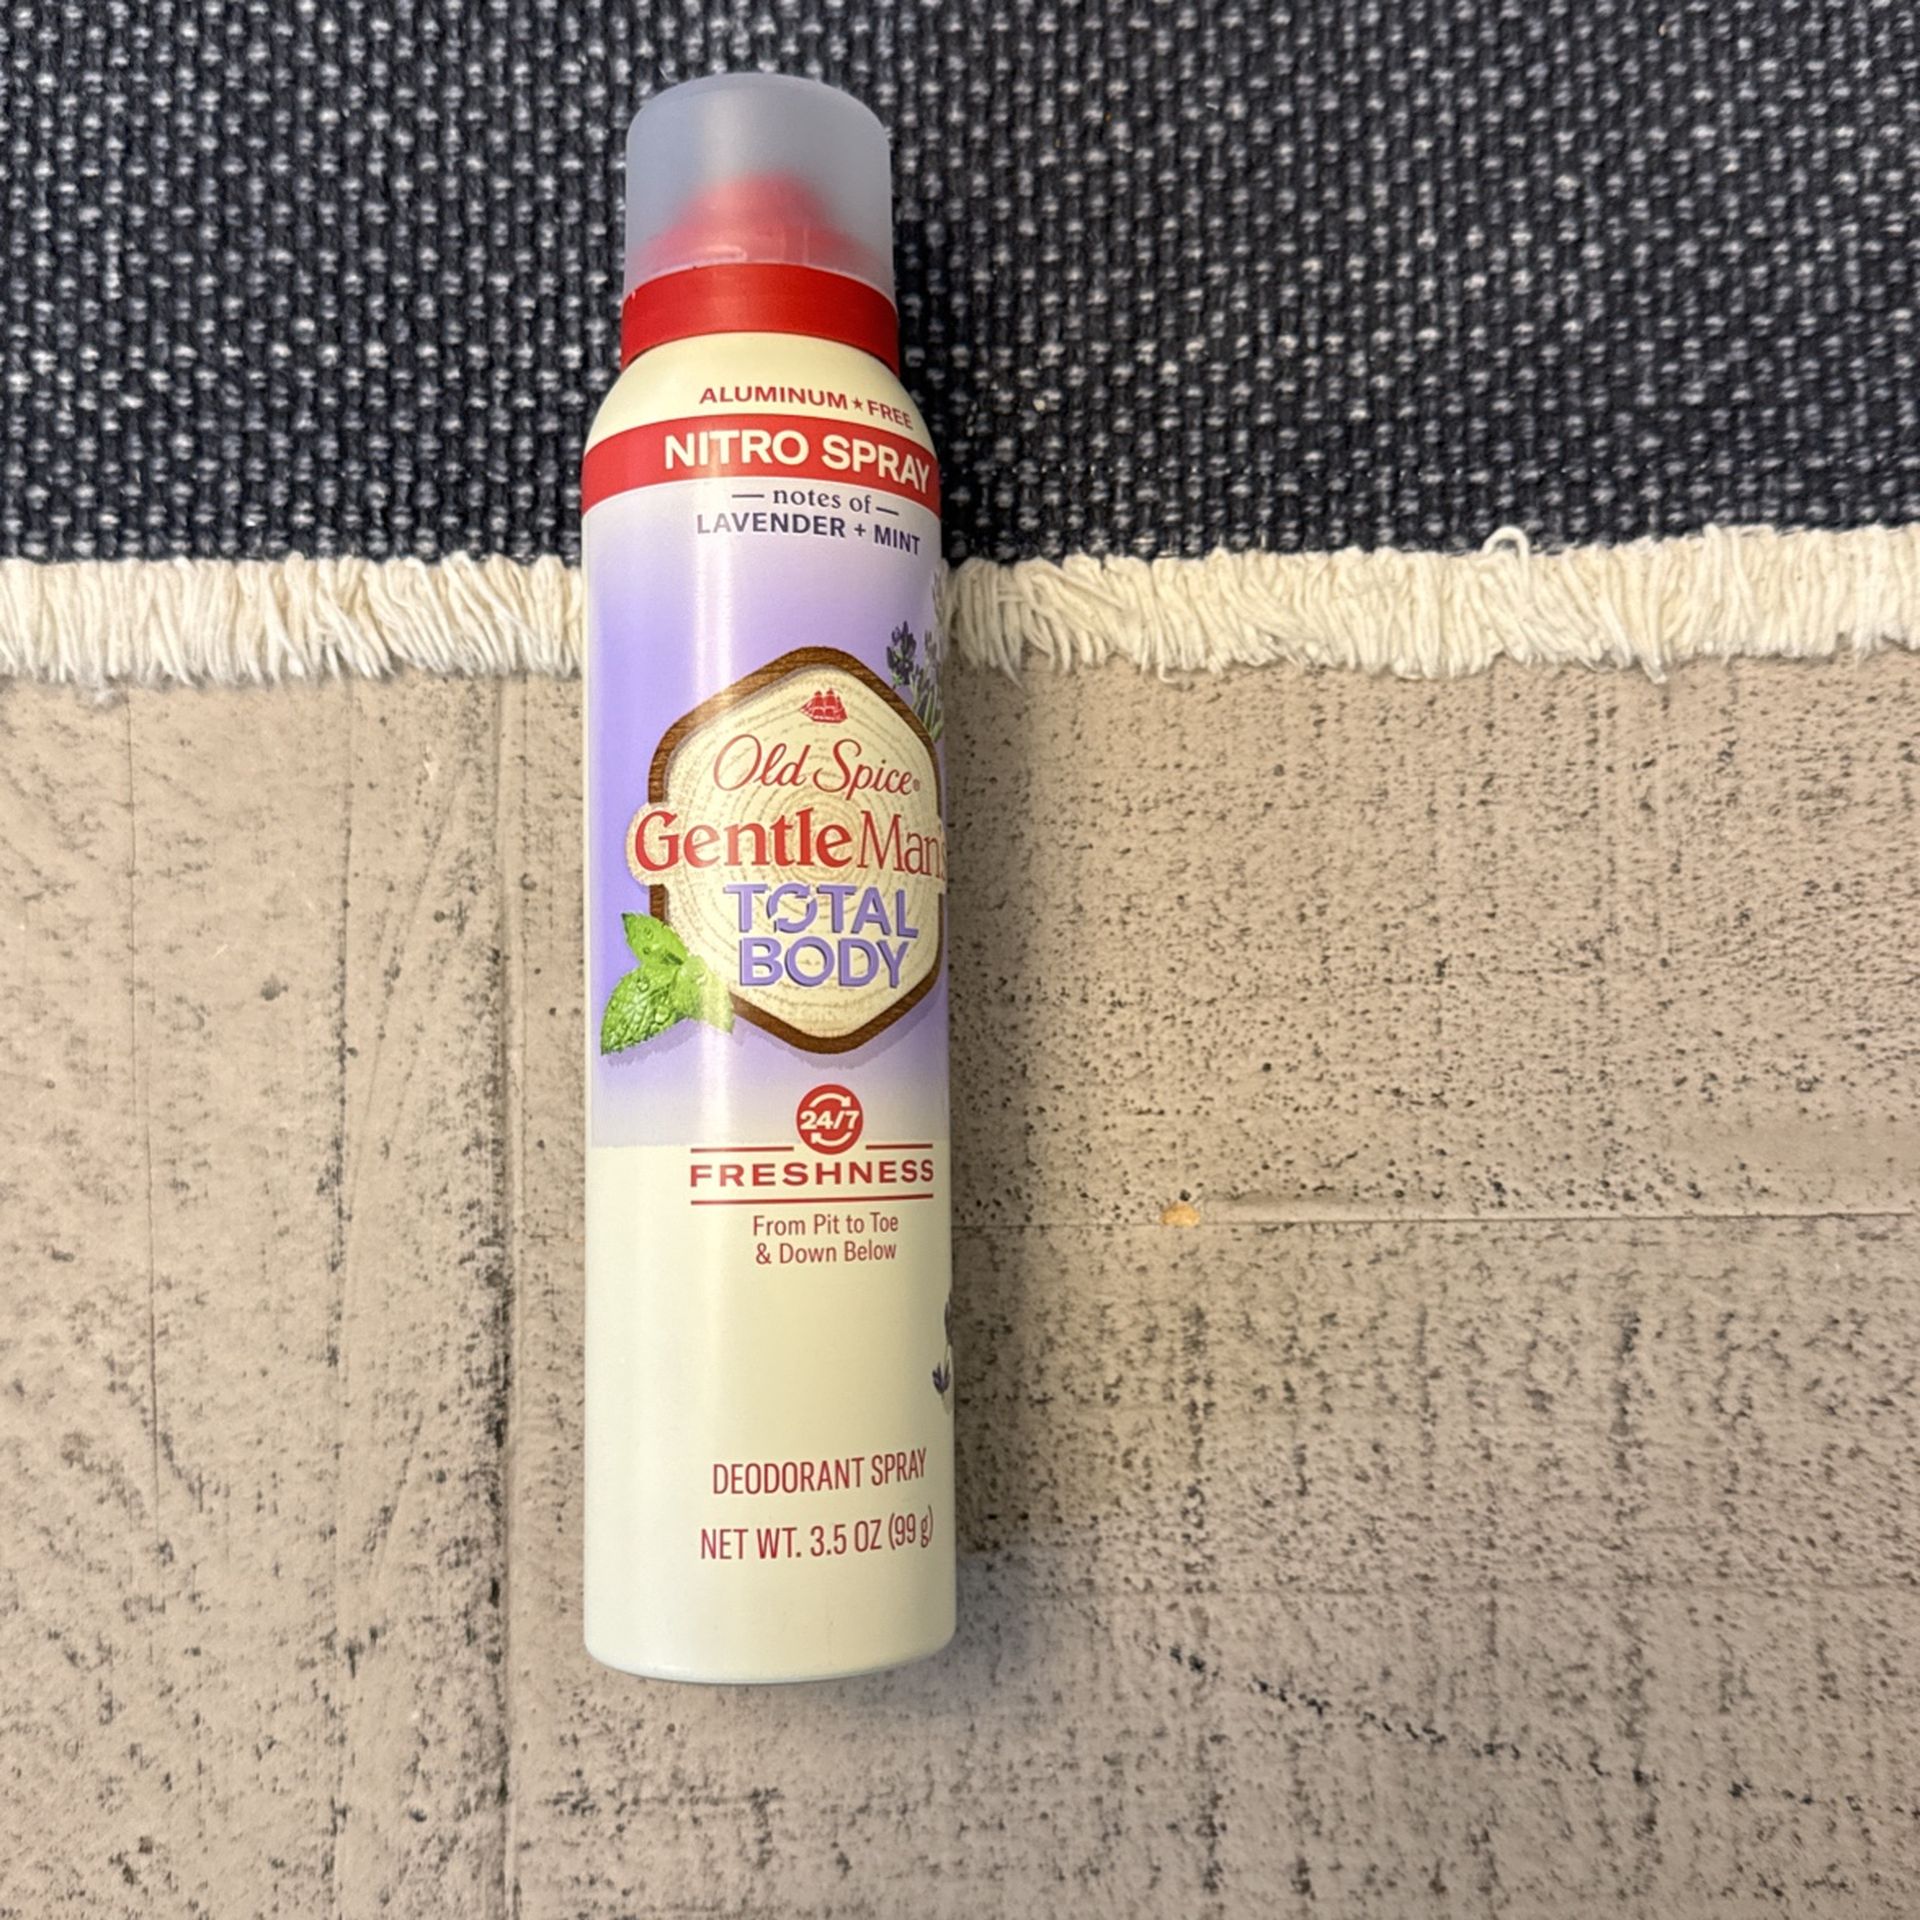 Old Spice GentleMan's Blend Total Body Deodorant for Men, Lavender Mint, Aluminum Free Spray, 3.5 oz